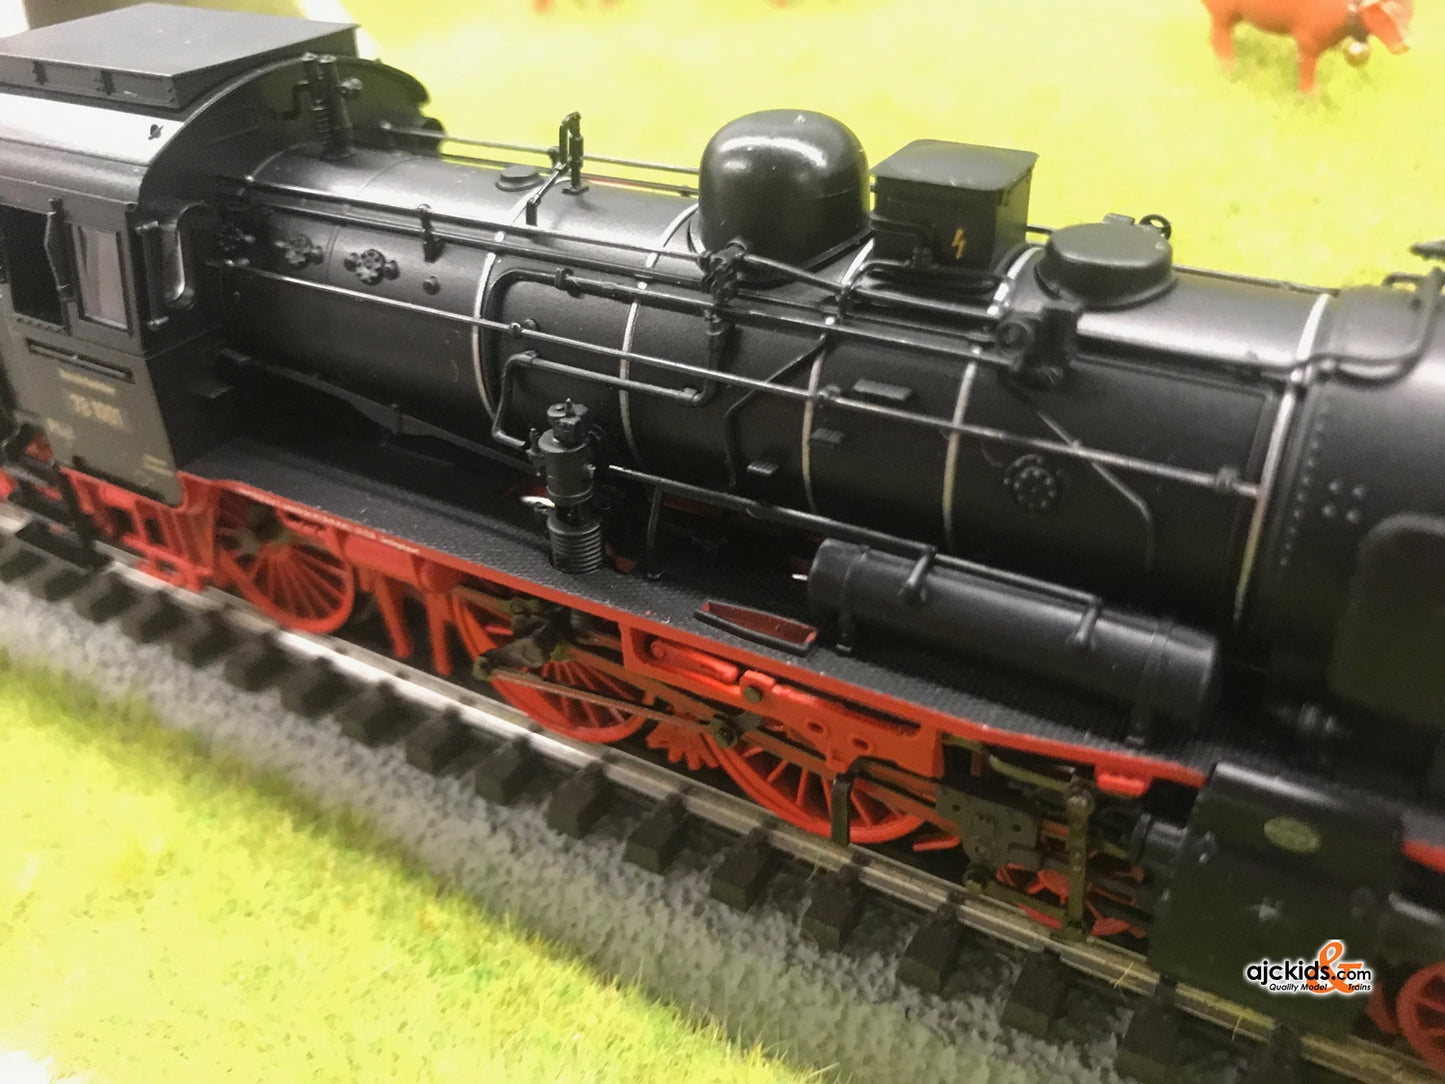 Marklin 39781 - Class 78.10 Steam Locomotive (Insider)